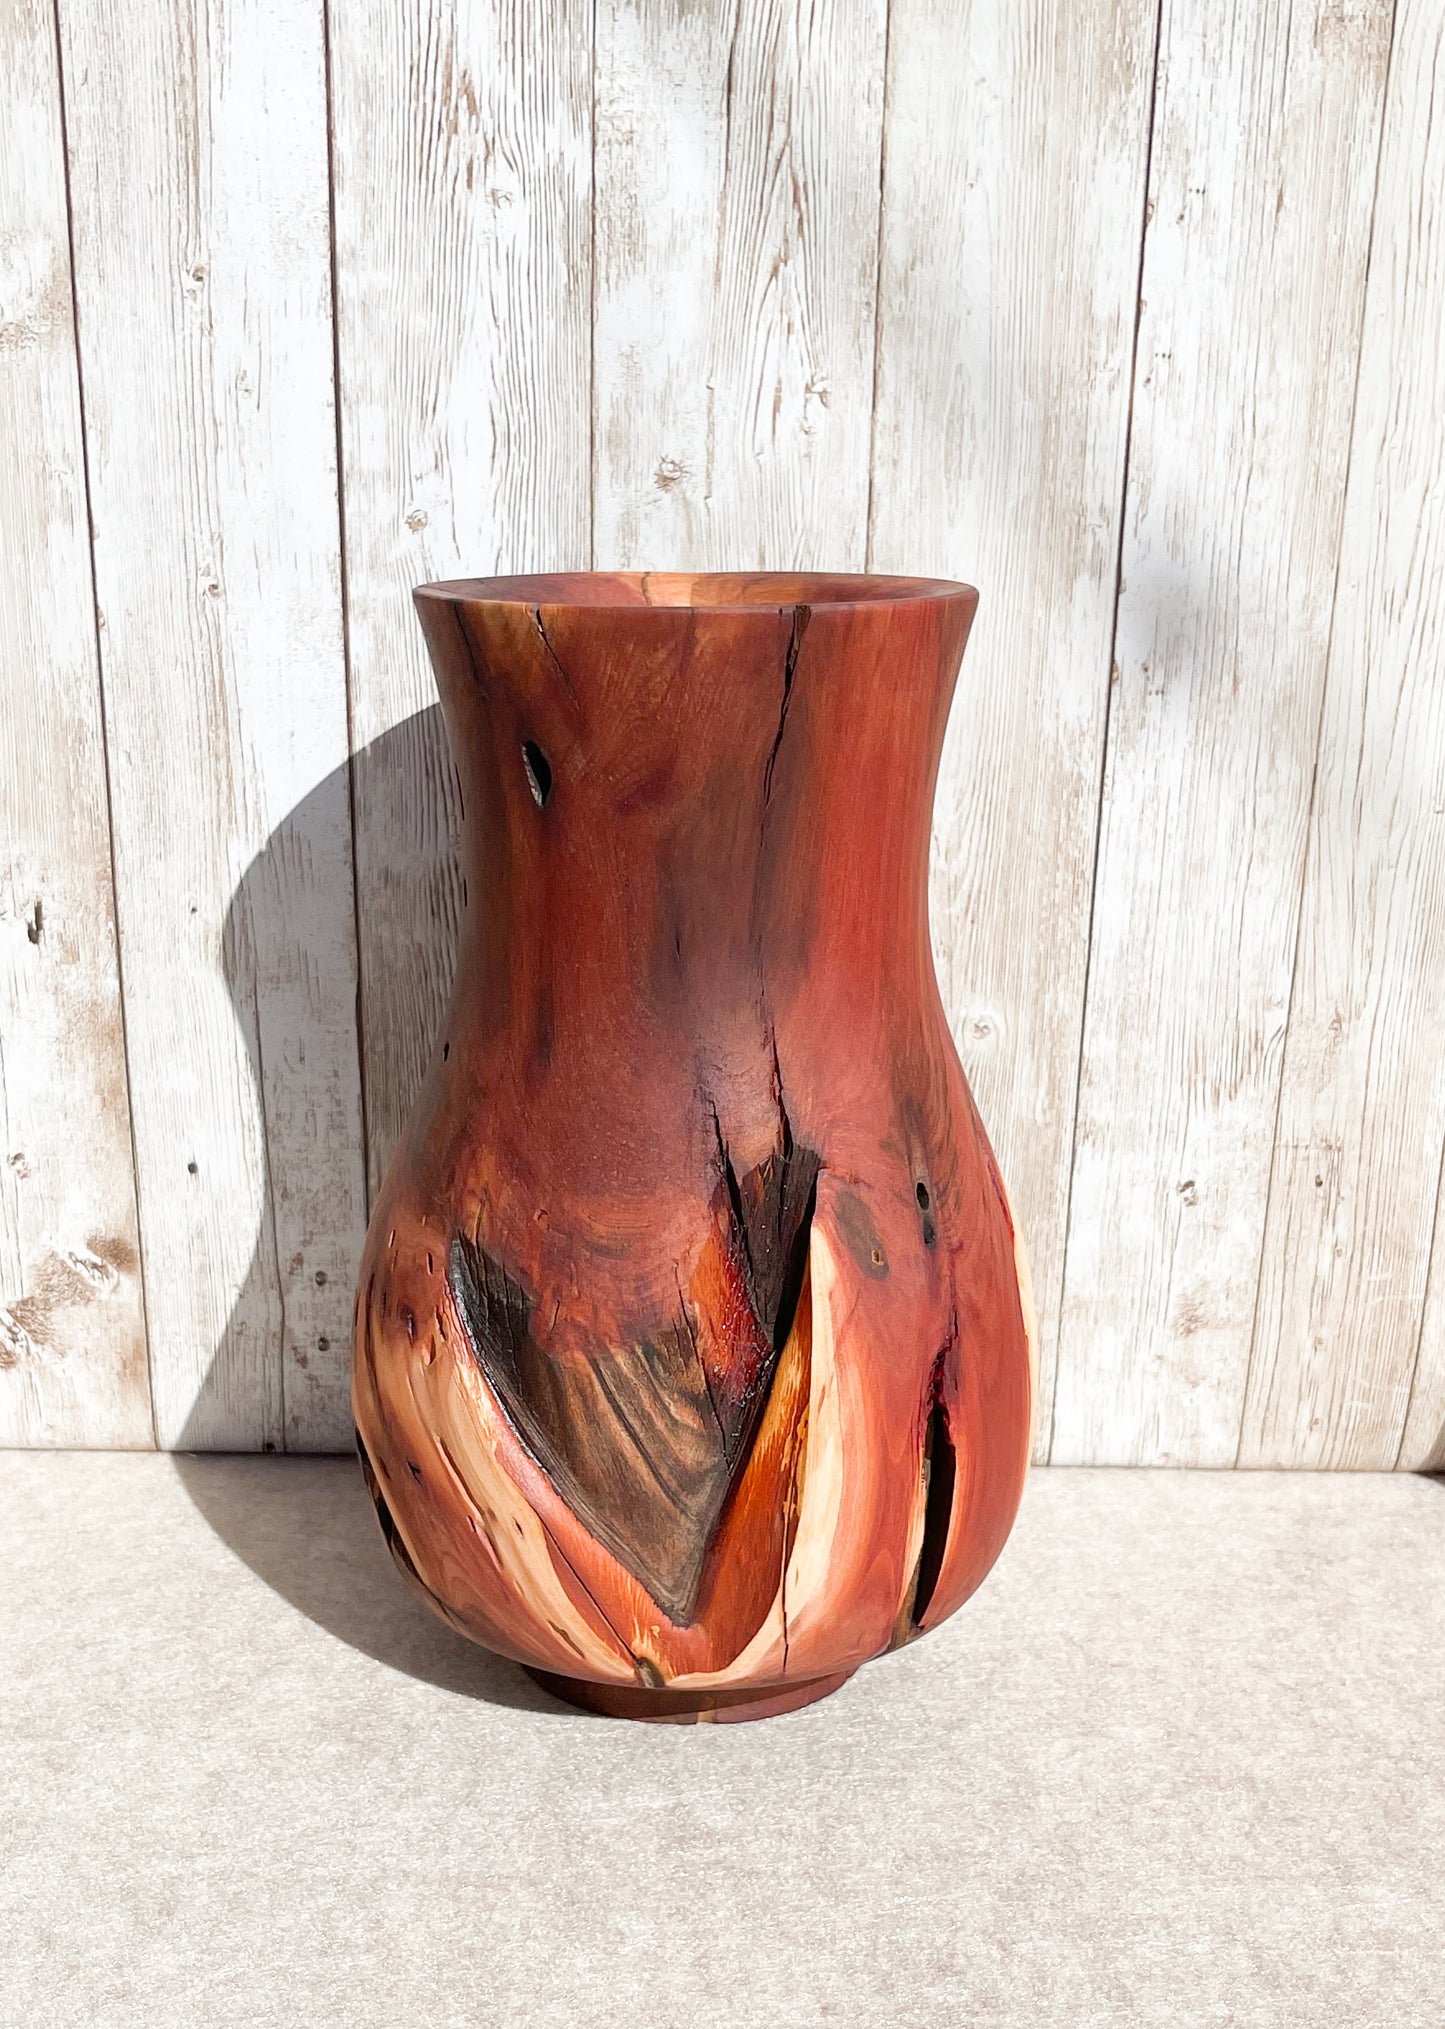 Manzanita Wood vase with natural cracks. 9.5"H x 6.5"D x 6"W